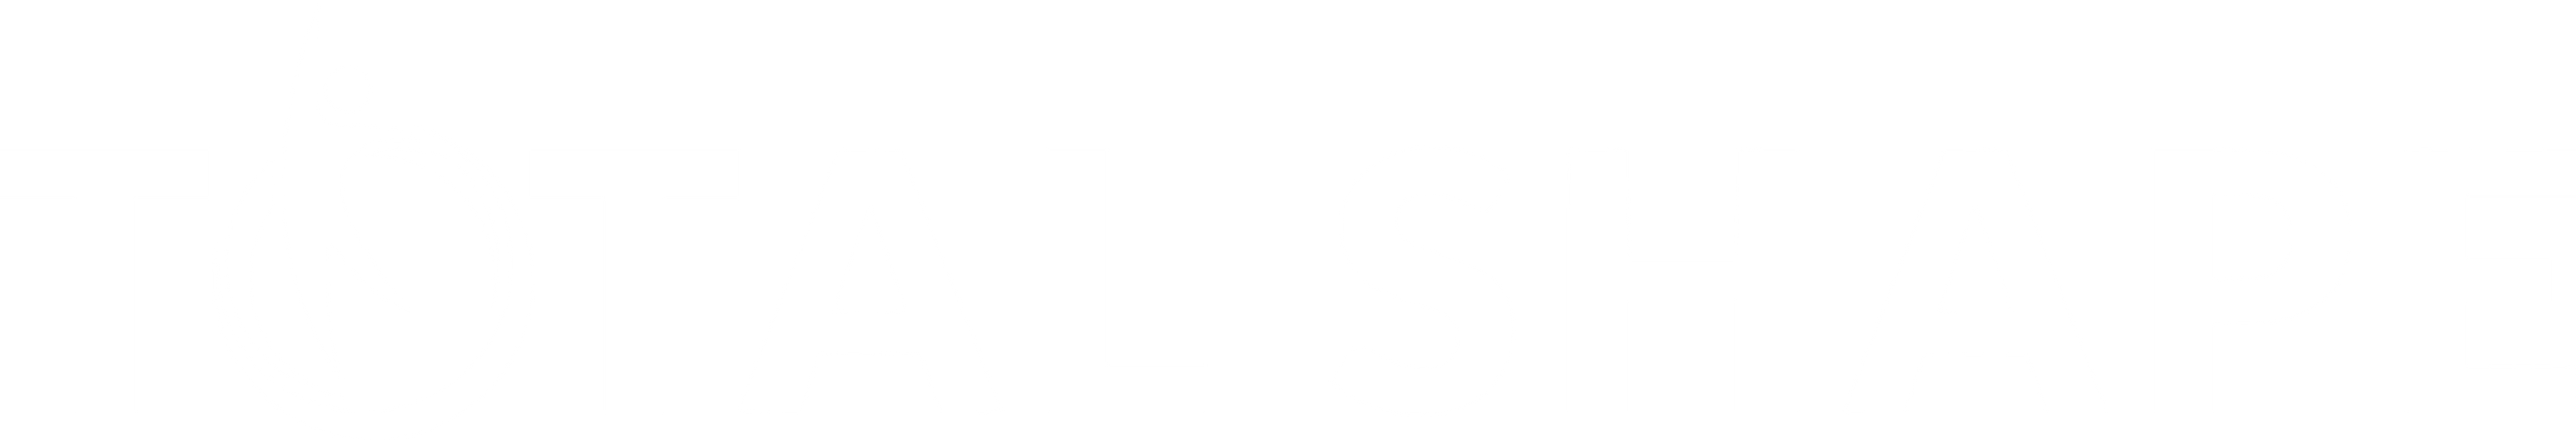 total shape white logo